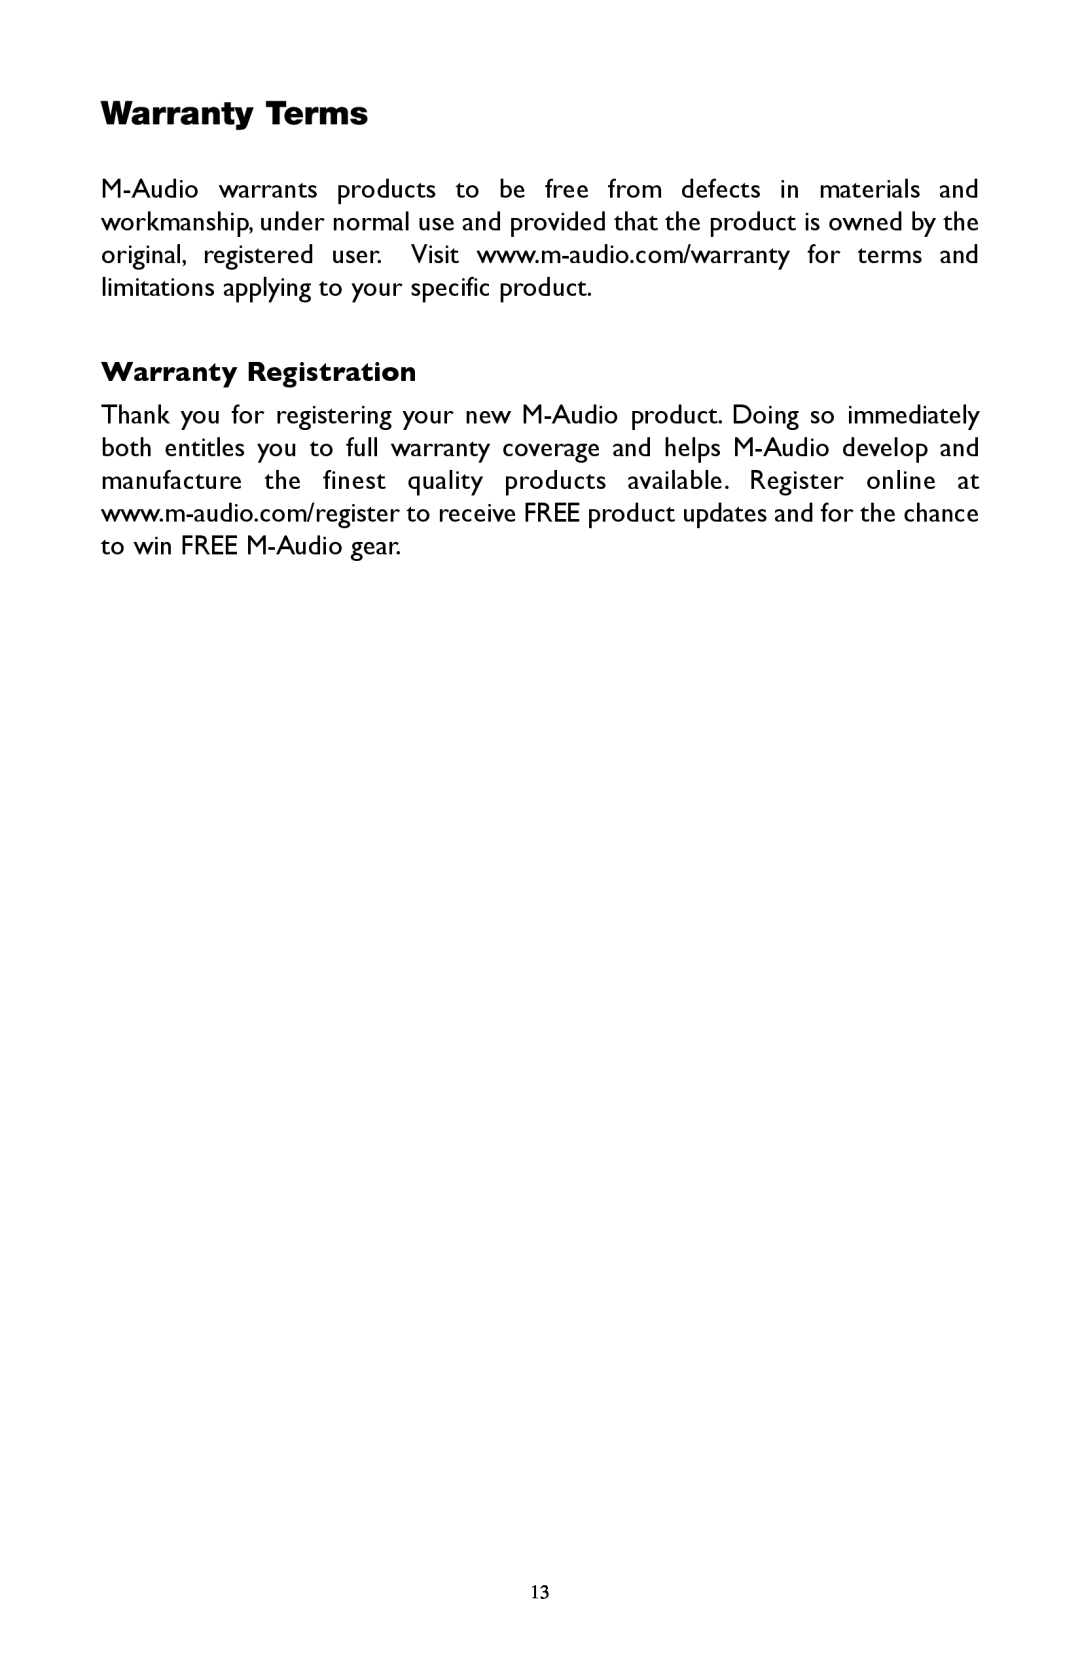 M-Audio LX4 warranty Warranty Terms, Warranty Registration 